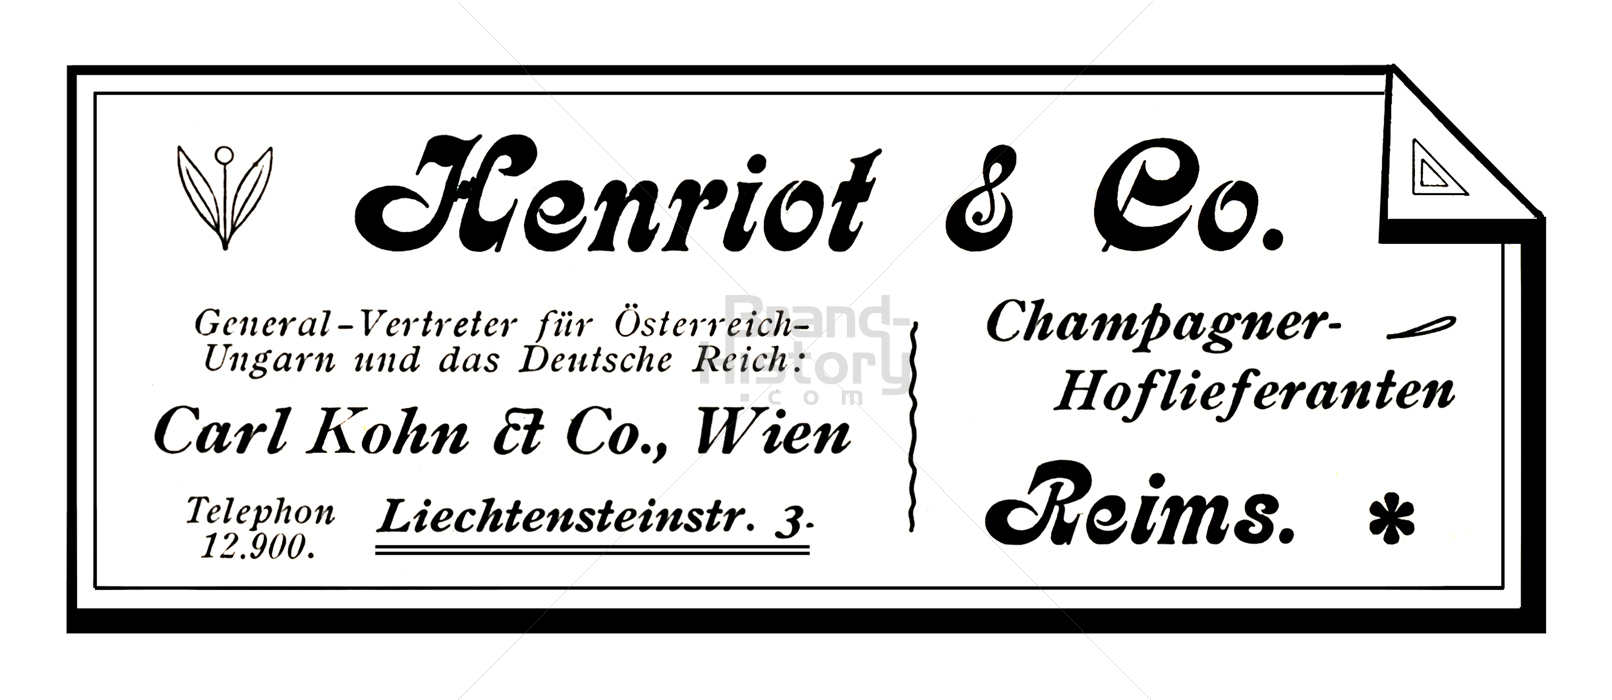 Henriot & Co.